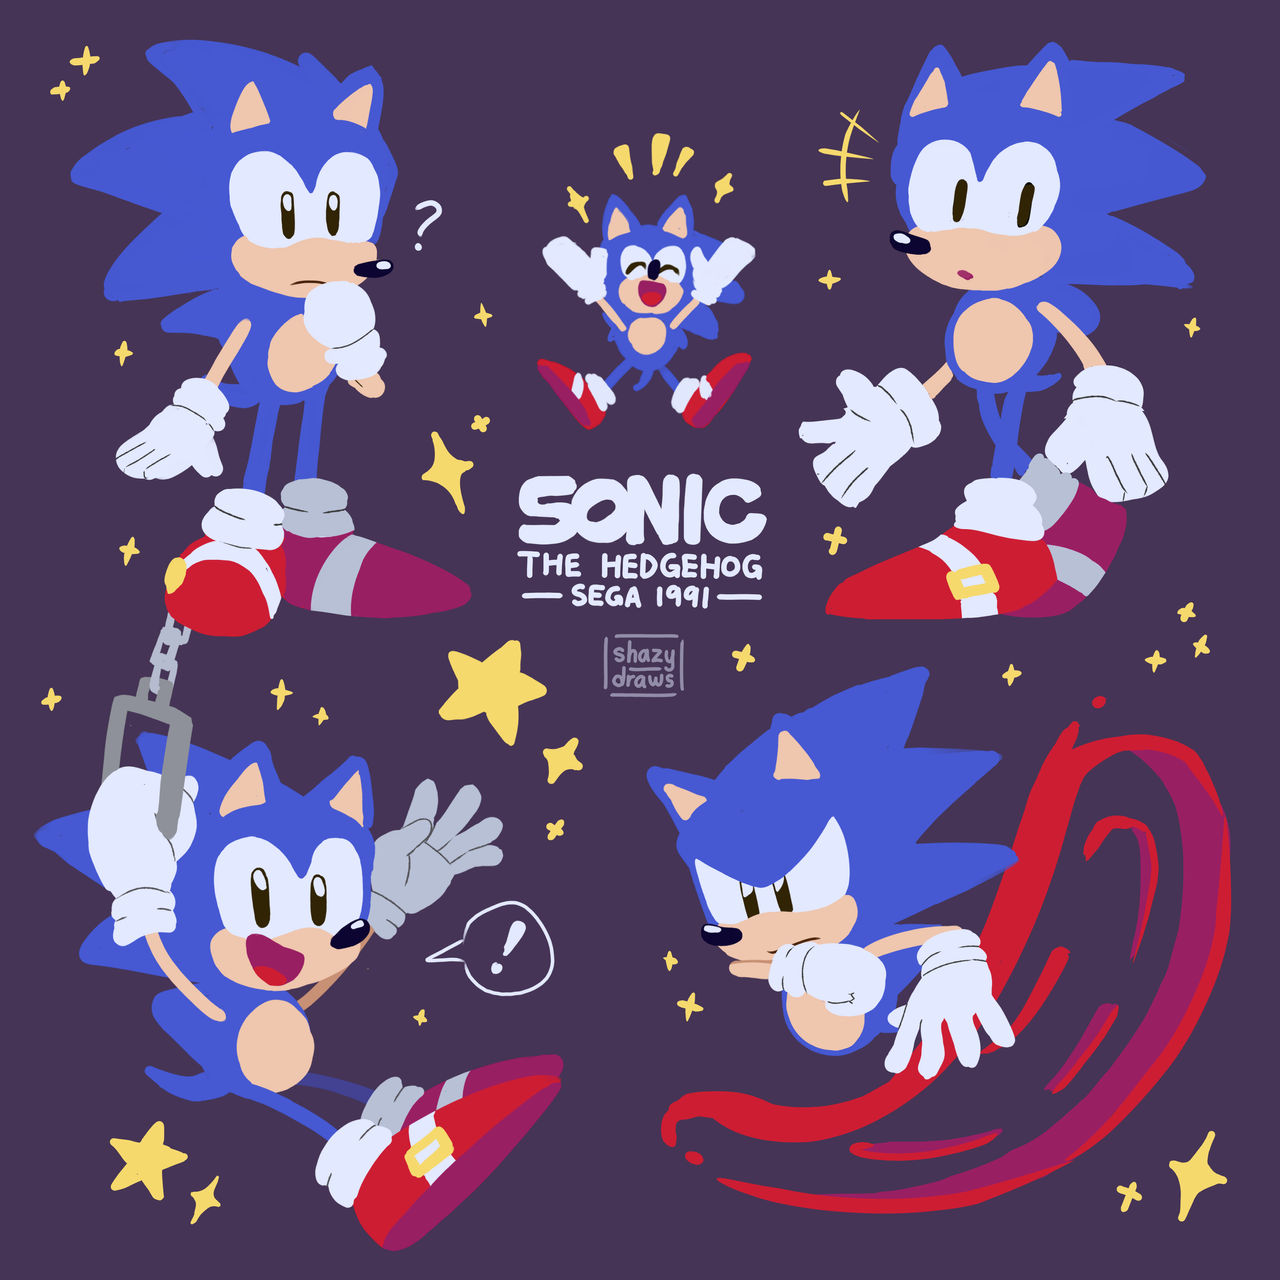 Sonic the Hedgehog 1 (1991): OST Album Art by Danhanado on DeviantArt